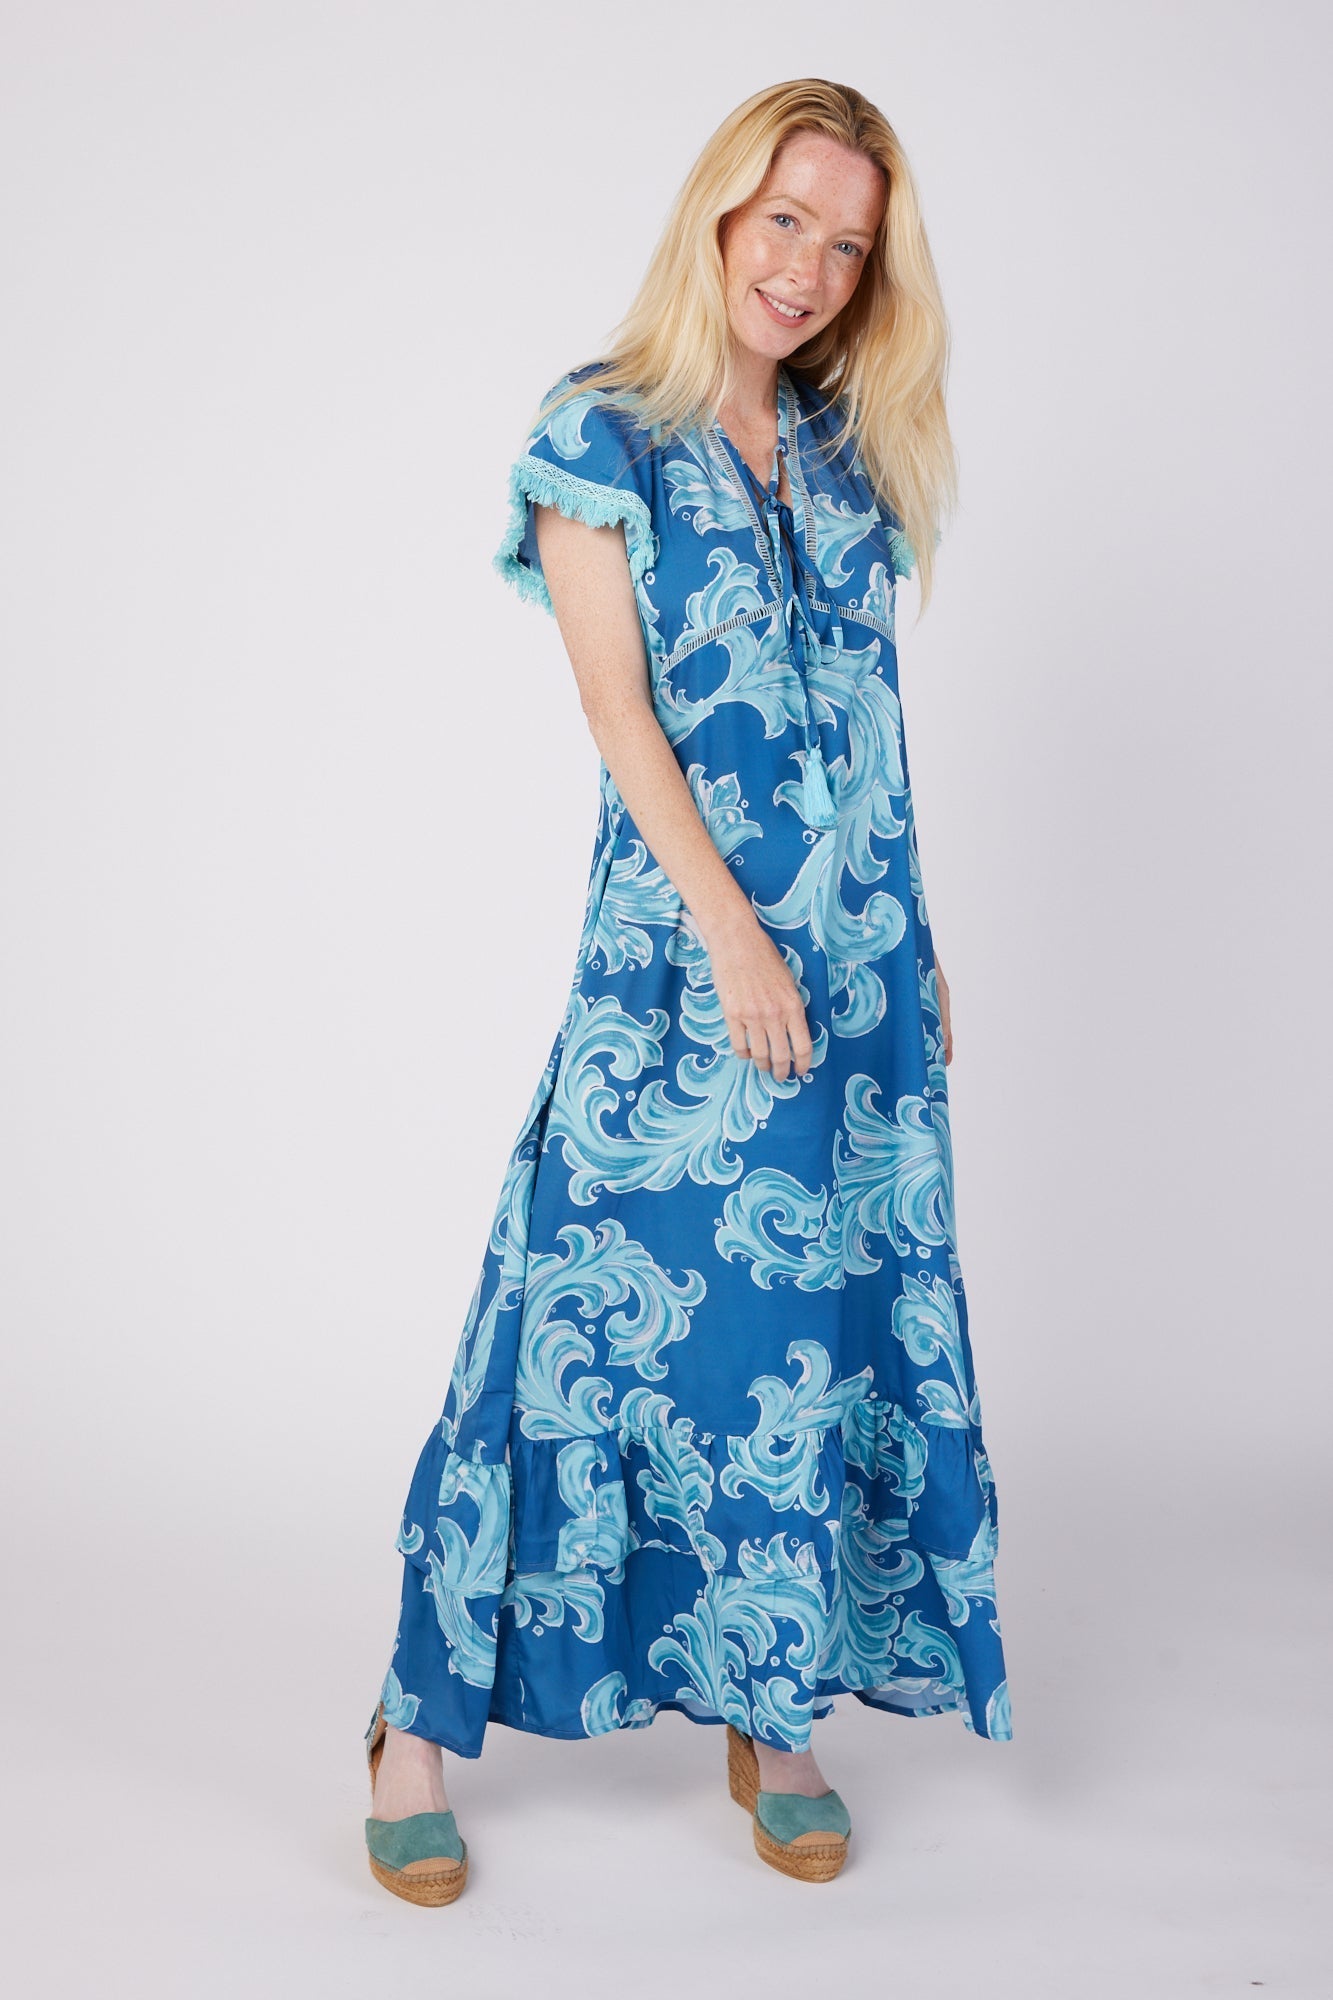 Shop Islamorada Dresses Online - Maxi Dress, Beach Outfits, Midi Dress &  More - Miss Monroe Boutique